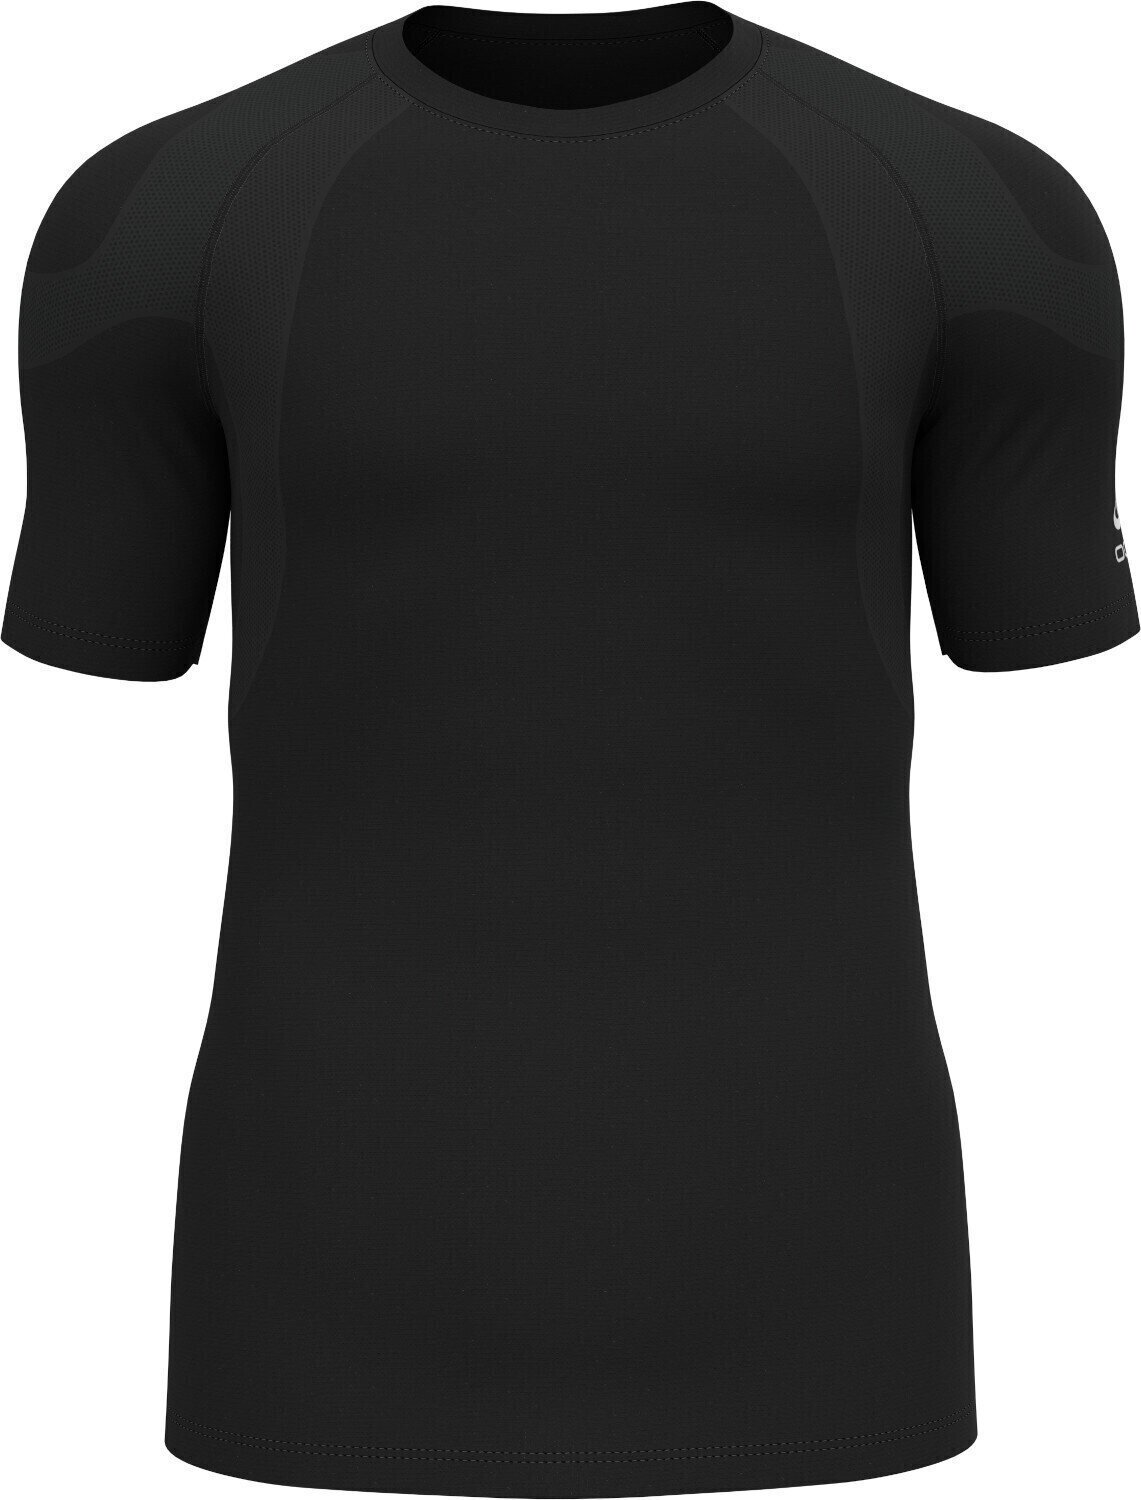 Laufshirt mit Kurzarm
 Odlo Active Spine 2.0 T-Shirt Black XL Laufshirt mit Kurzarm